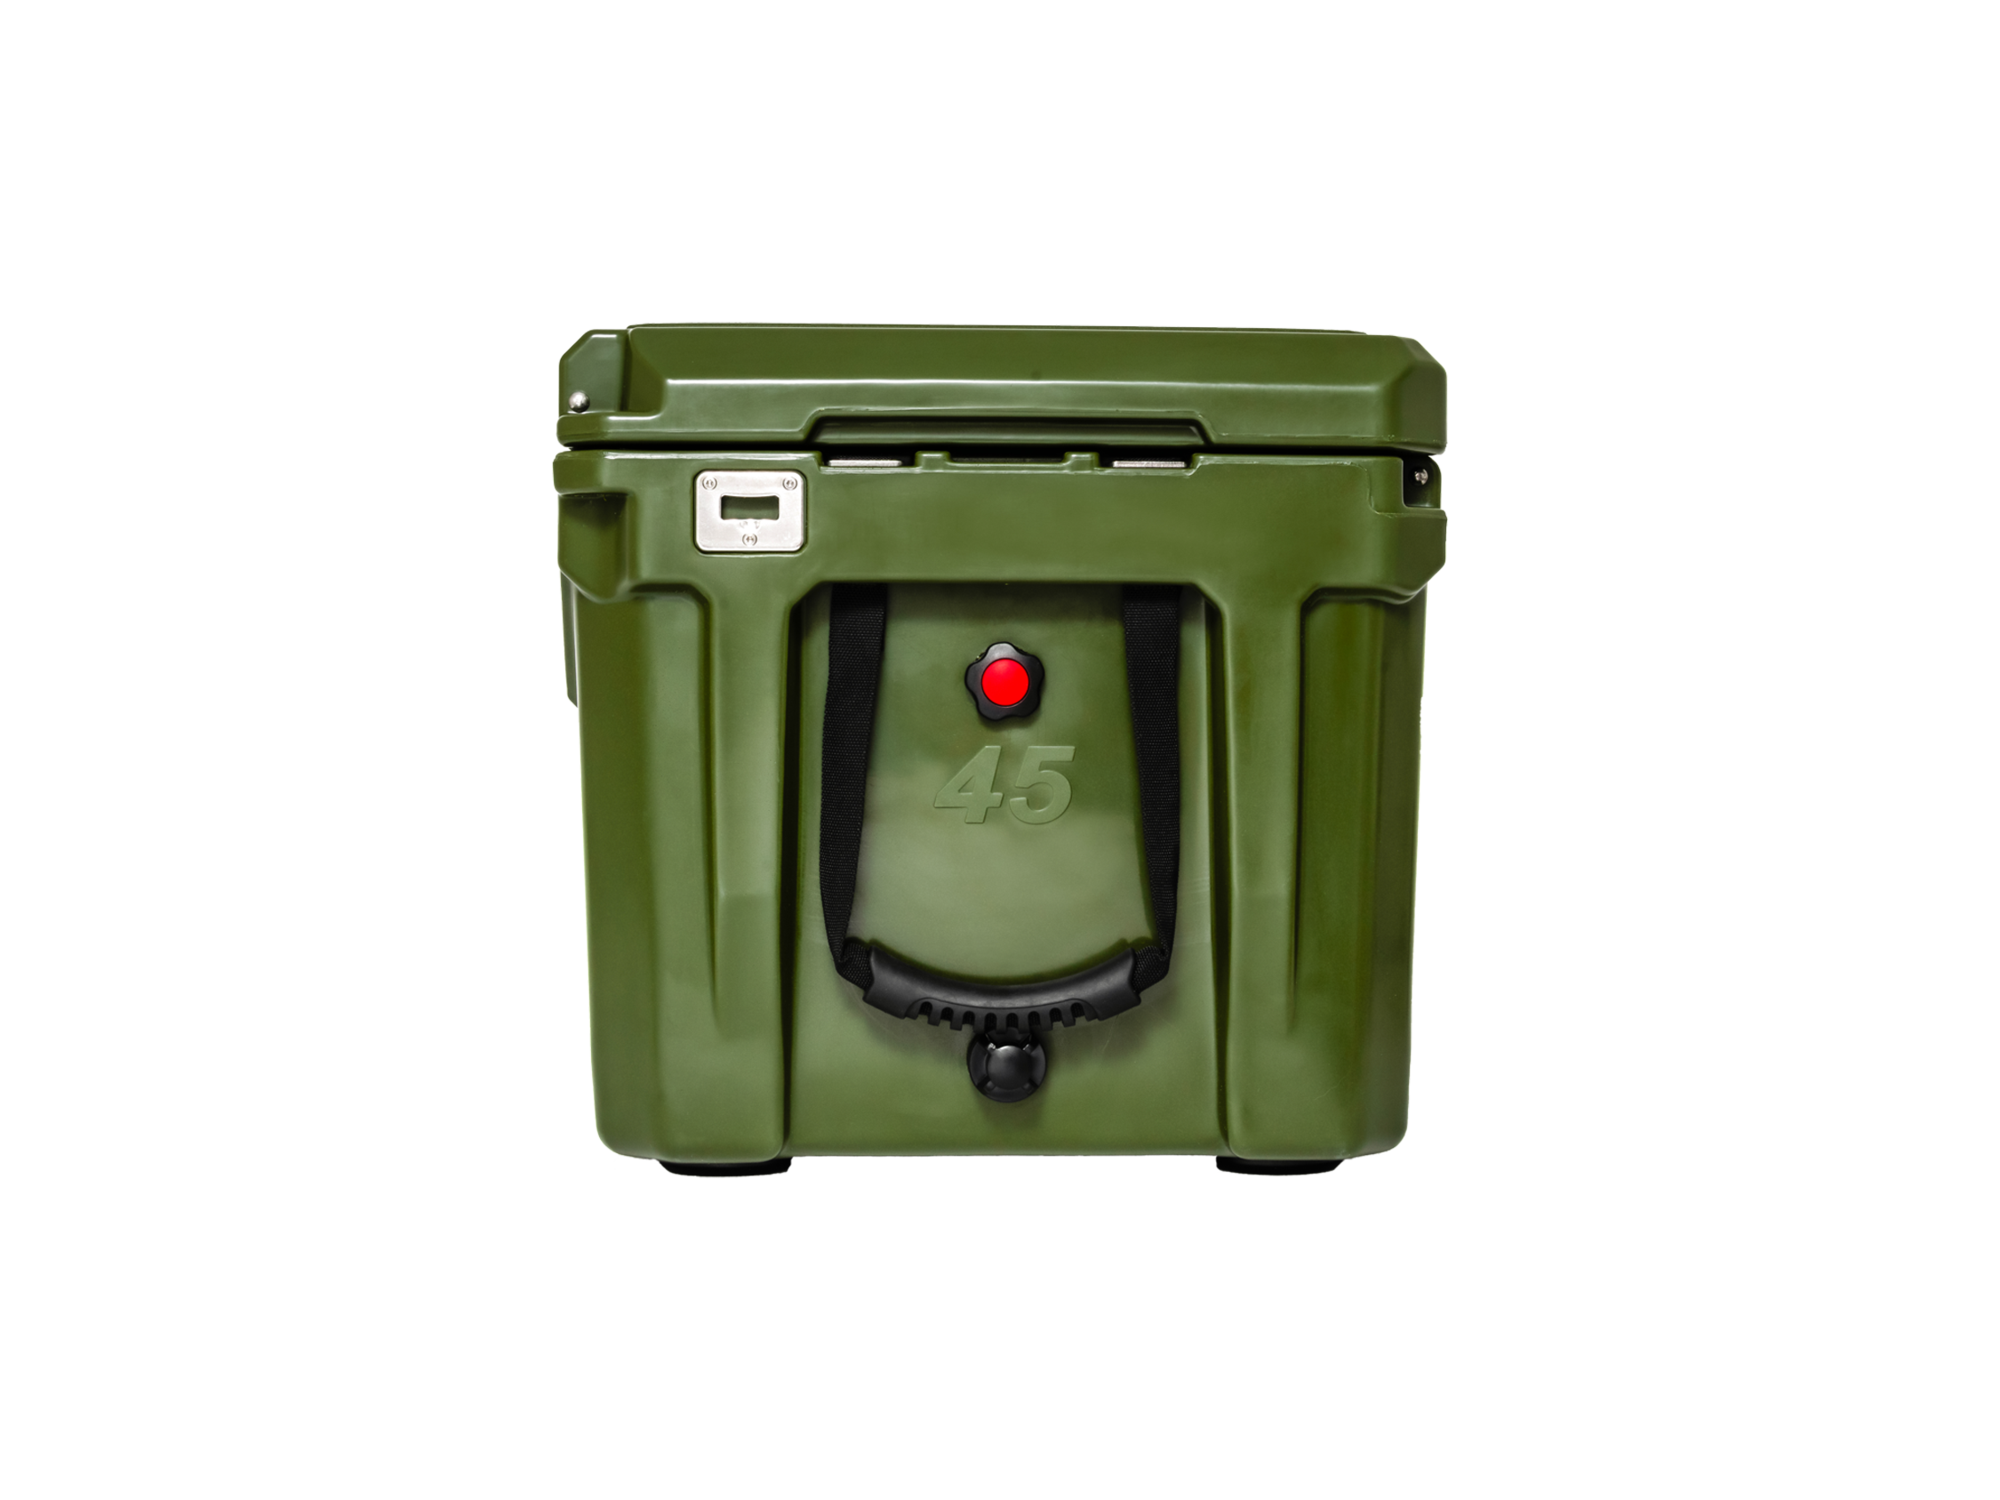 Roam Rugged Cooler, OD Green - 45QT